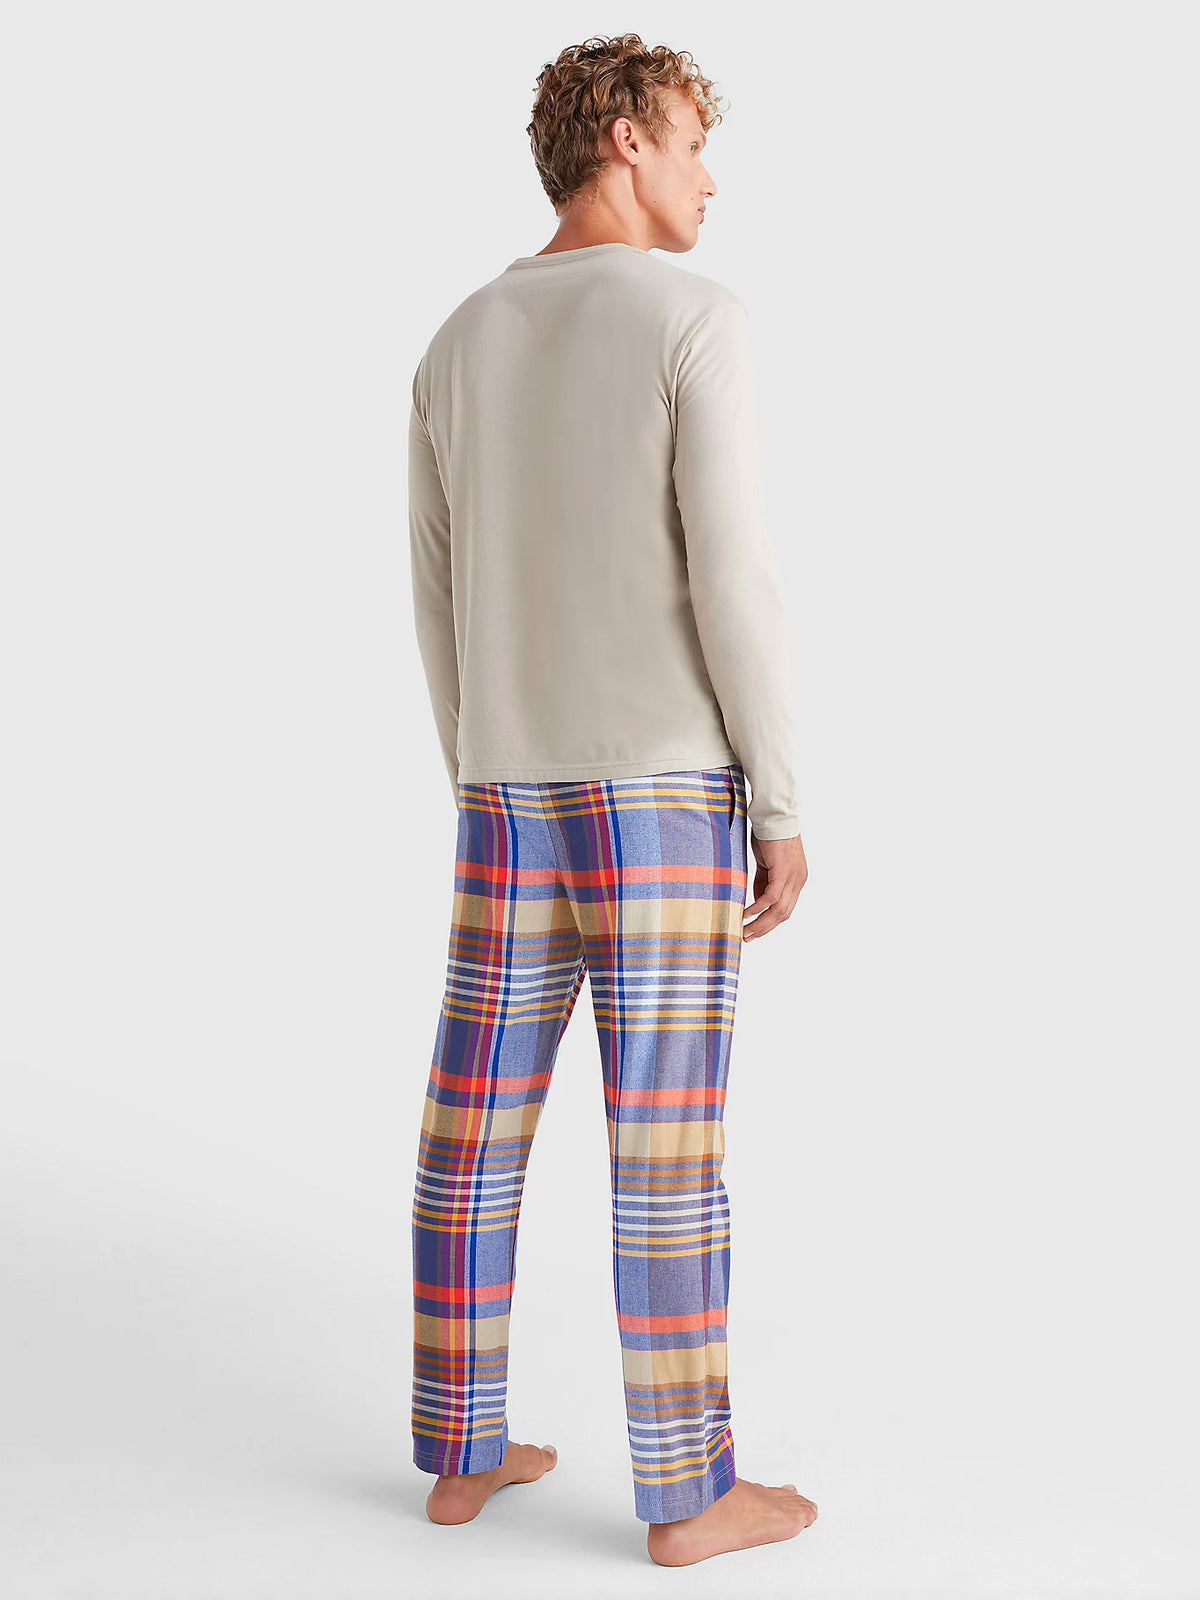 Tommy Hilfiger Mens Pyjama Set - Long Check Flannel Bottoms & L/S